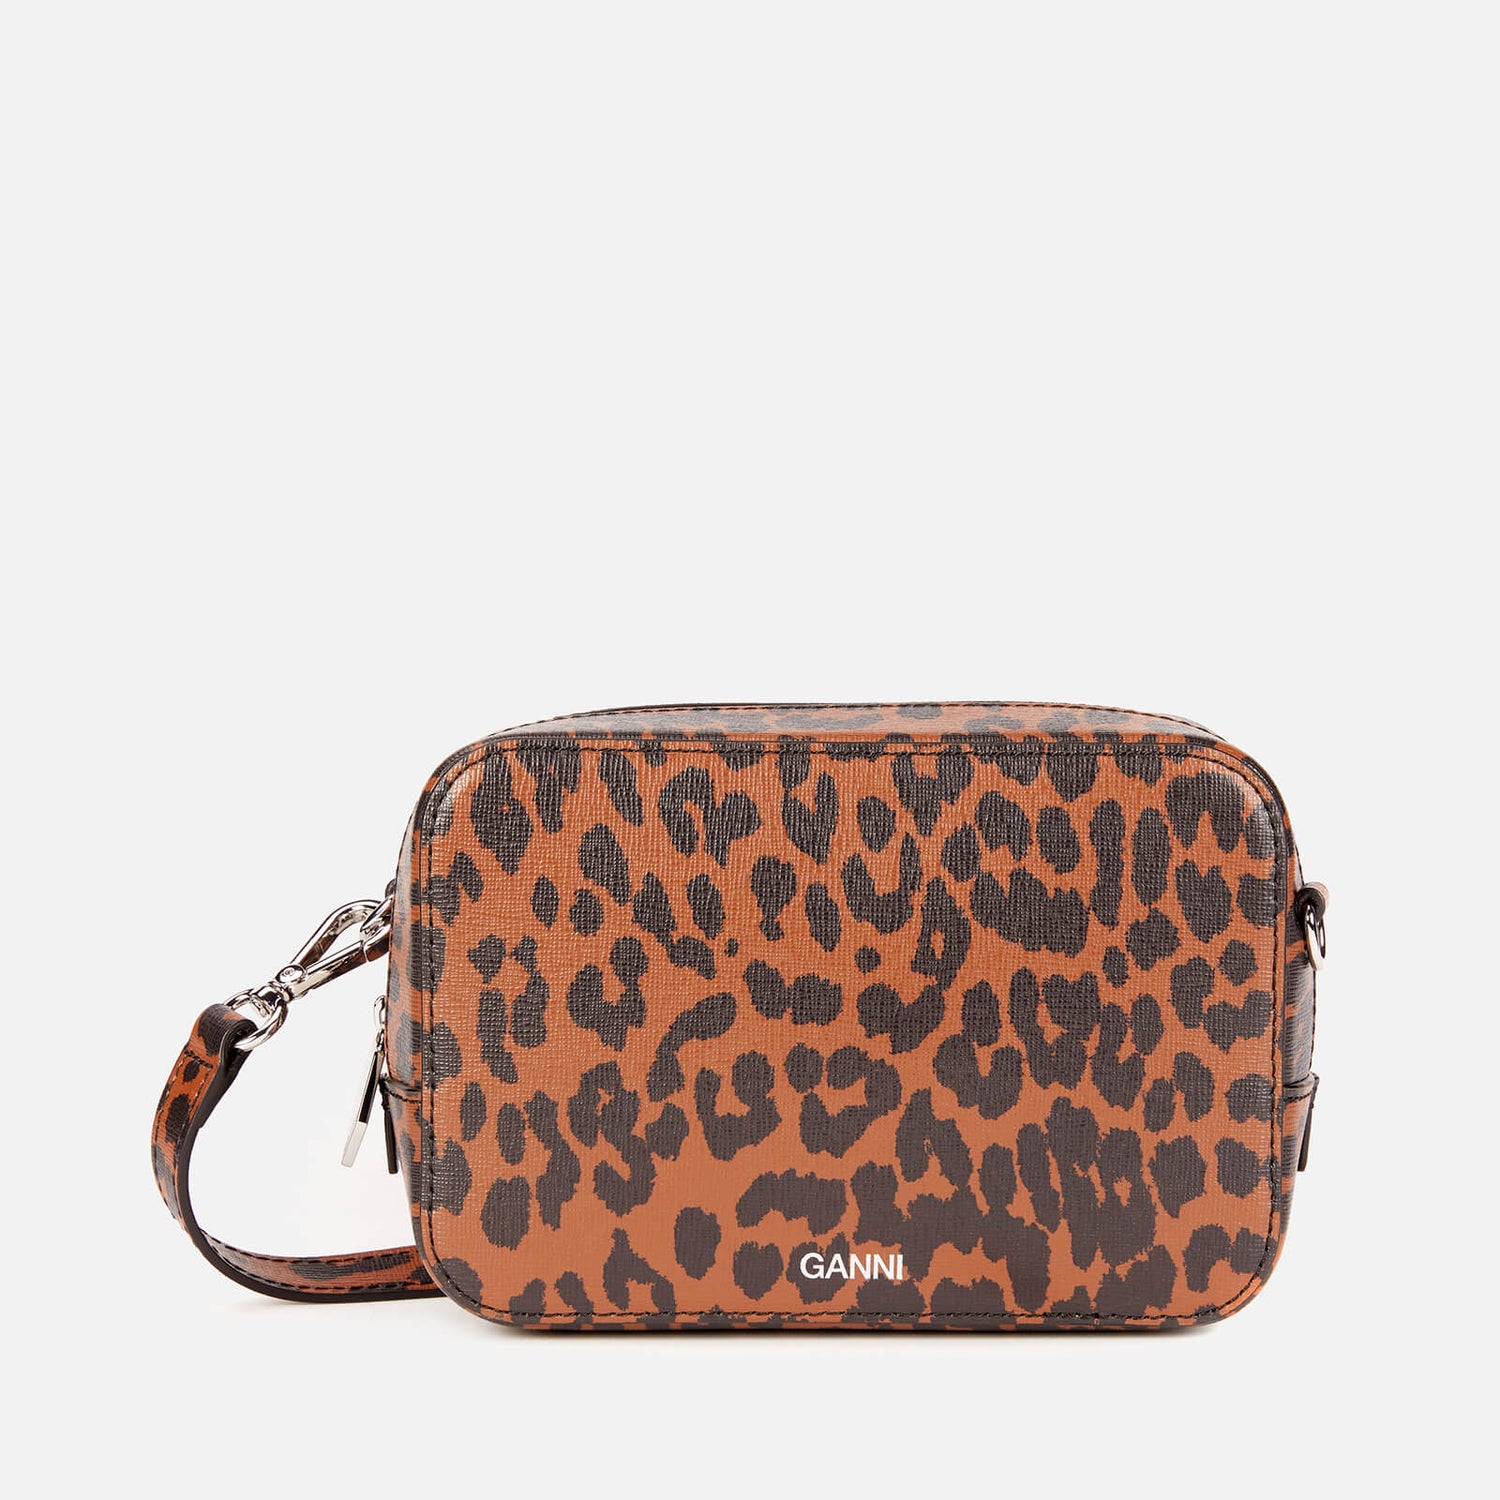 Ganni Women's Leopard Print Leather Cross Body Bag - Toffee - Free UK ...